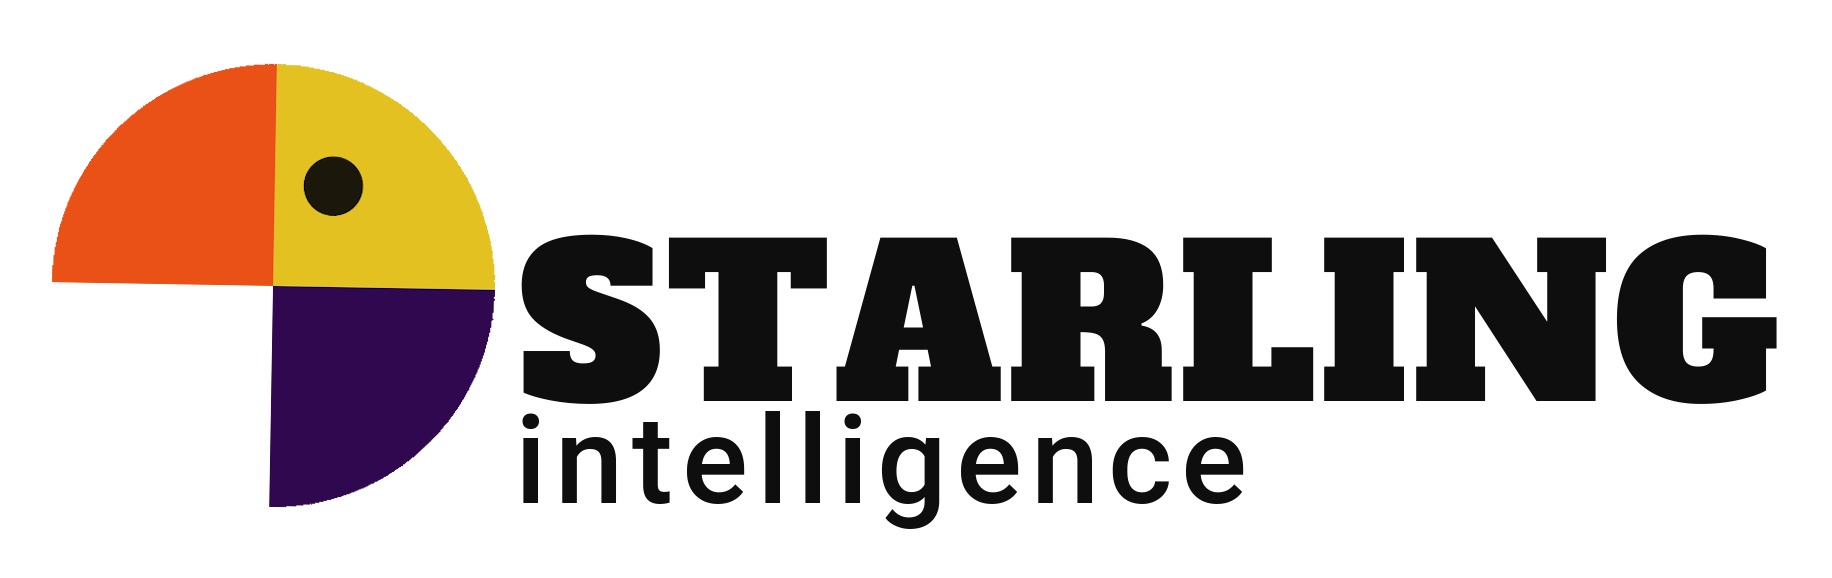 Starling Intelligence